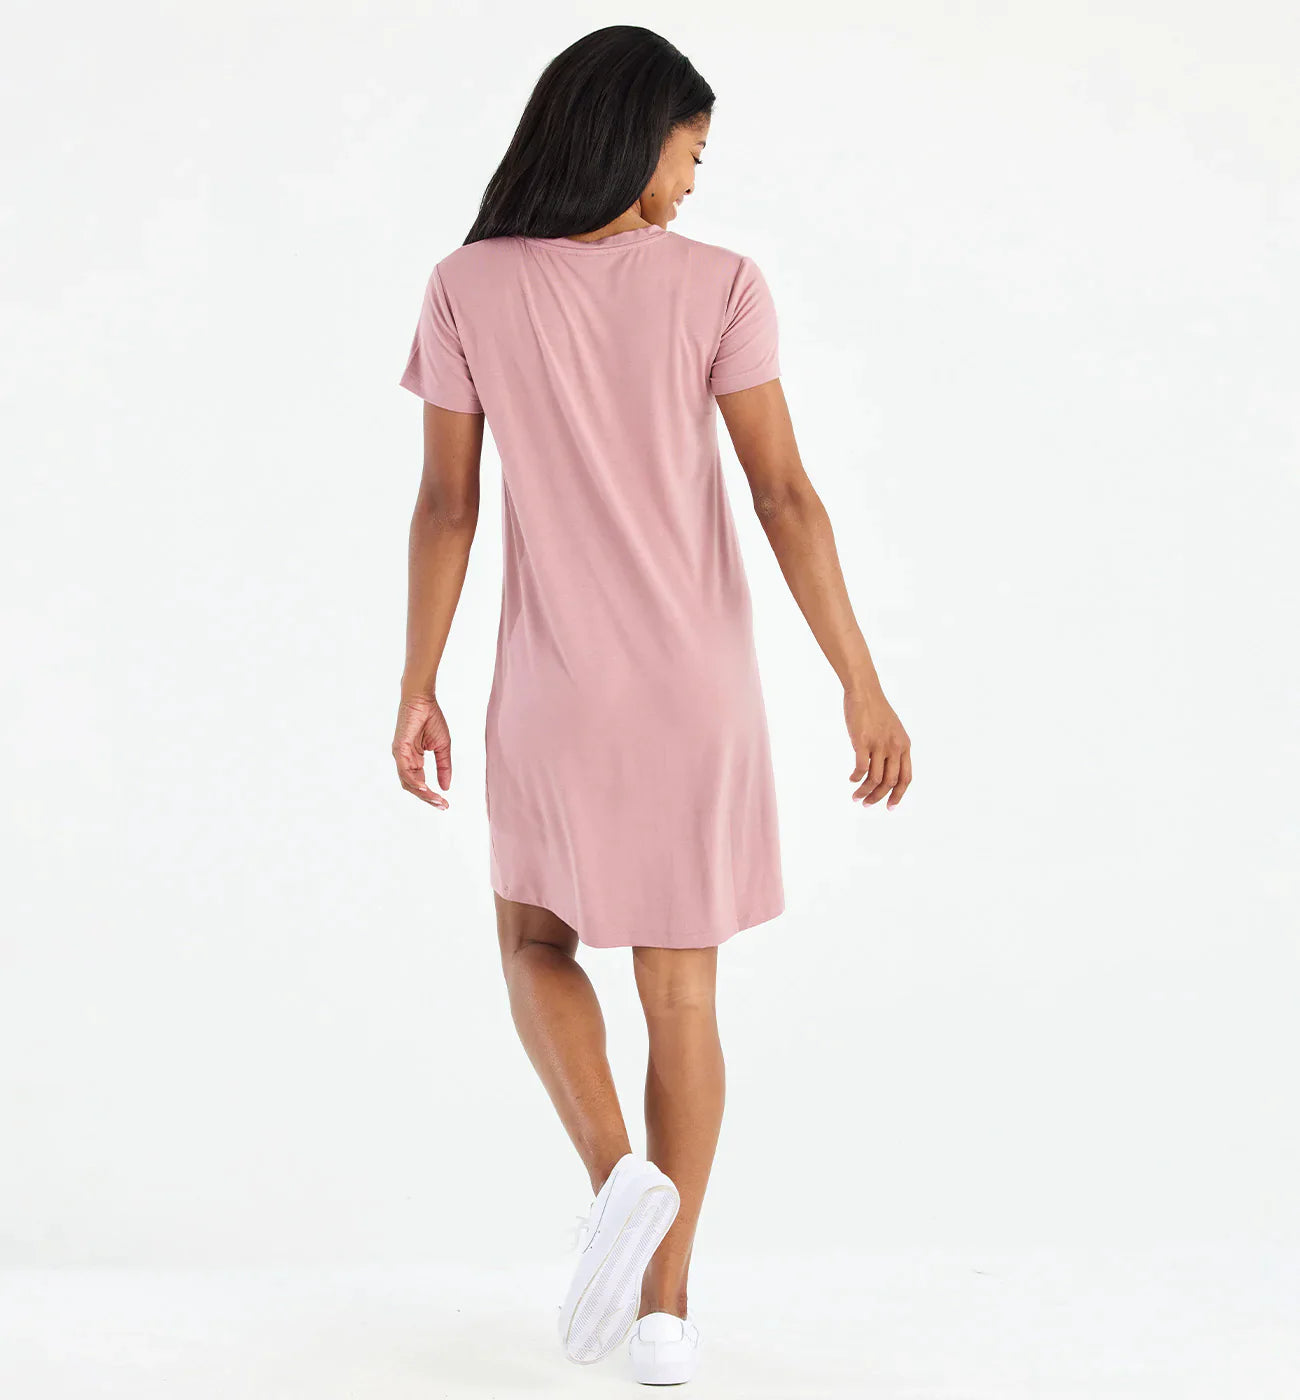 Free Fly Women's Bamboo Flex Pocket Dress - Ash Rose